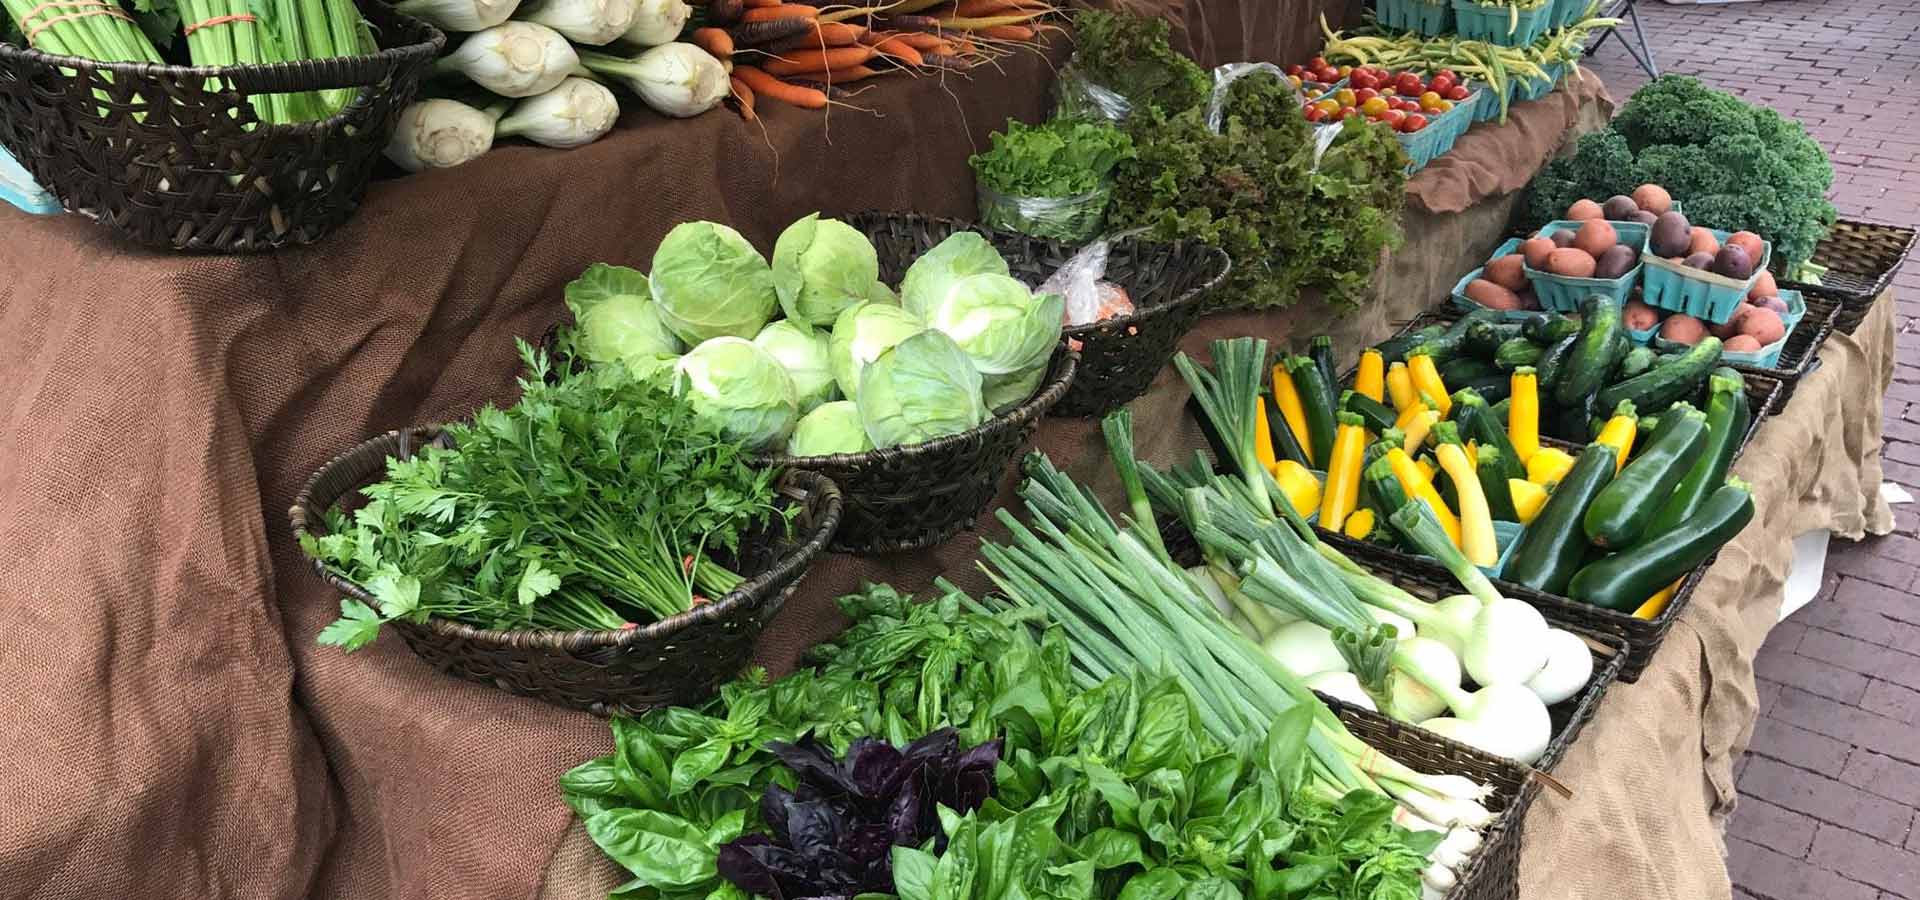 Original Farmers’ Market returns for its 24th season